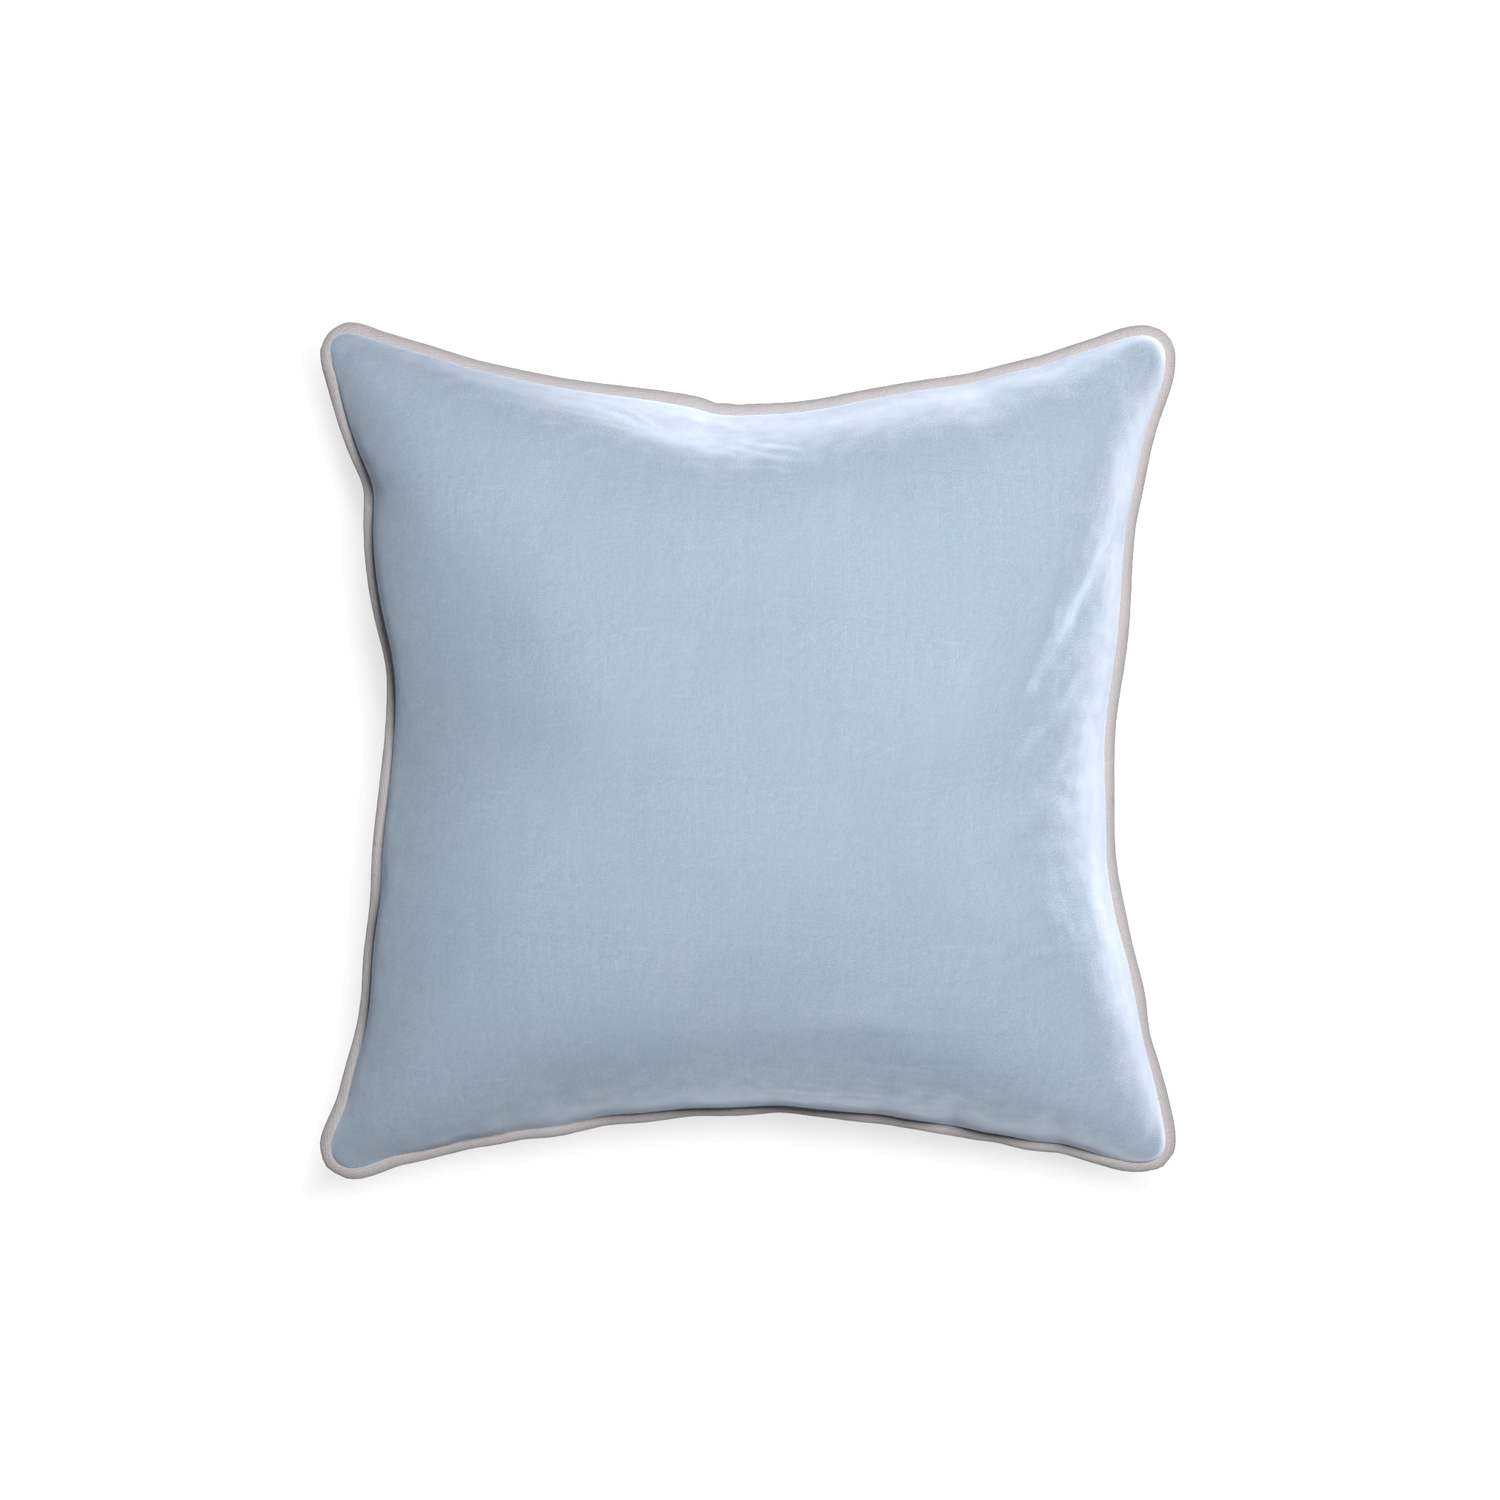 18-square sky velvet custom pillow with pebble piping on white background